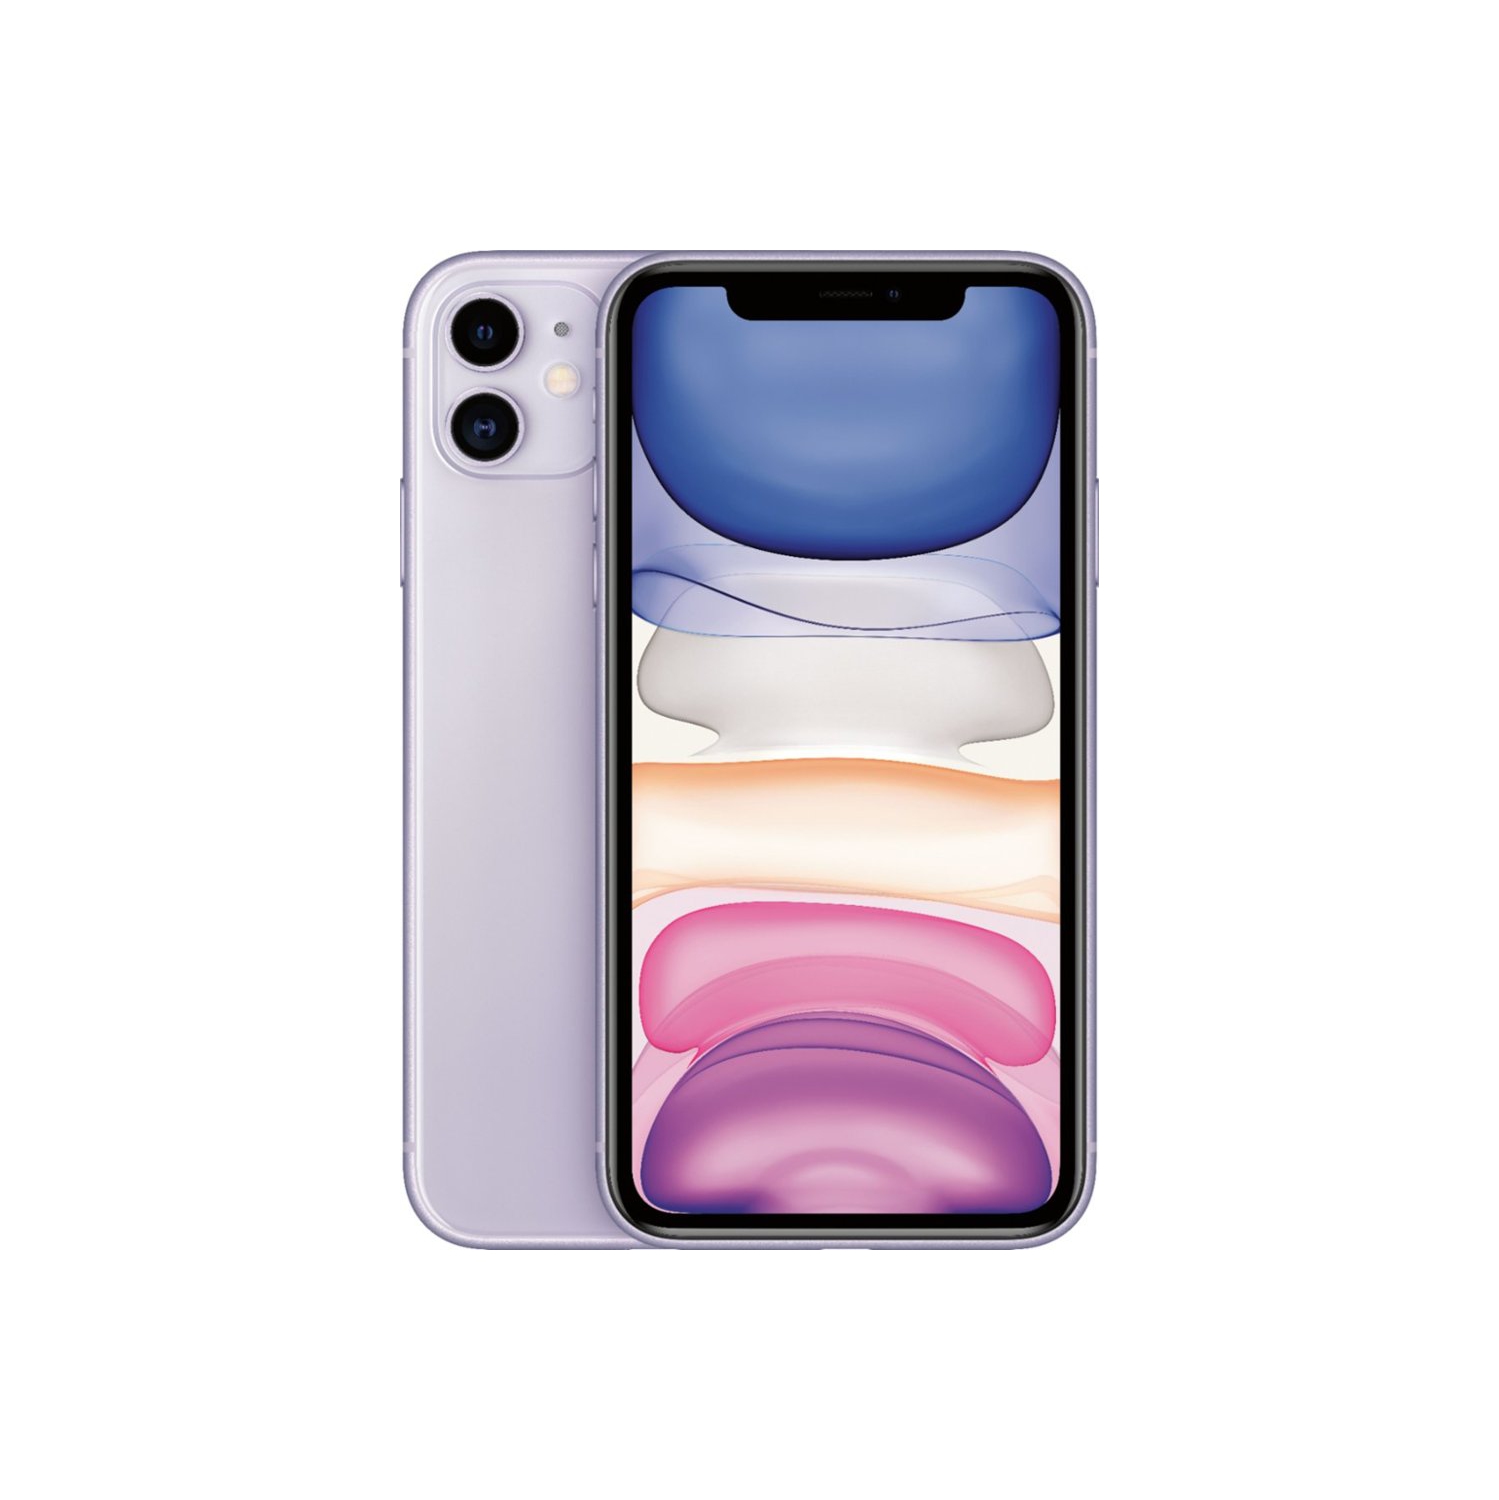 Refurbished (Excellent) - Apple iPhone 11 64GB Smartphone - Purple - Unlocked - Certified Refurbished